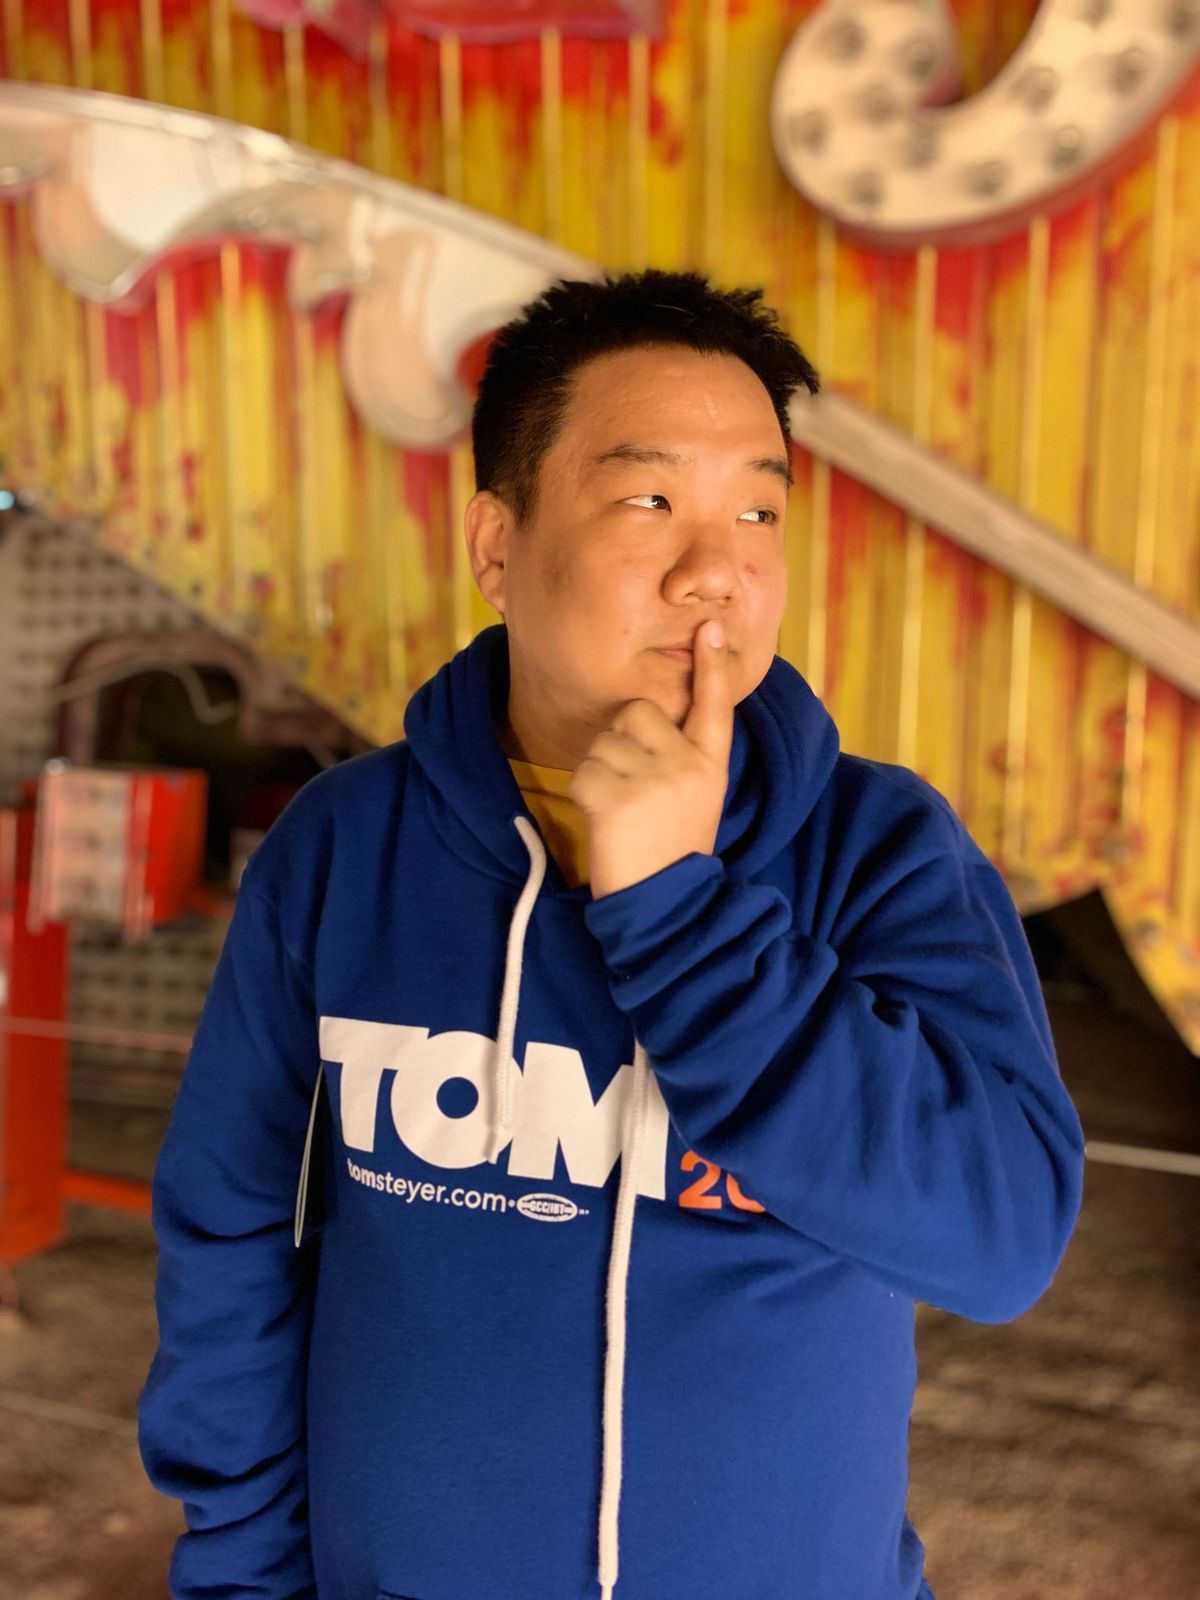 Tony Choi poses in a Tom Steyer 2020 sweatshirt.